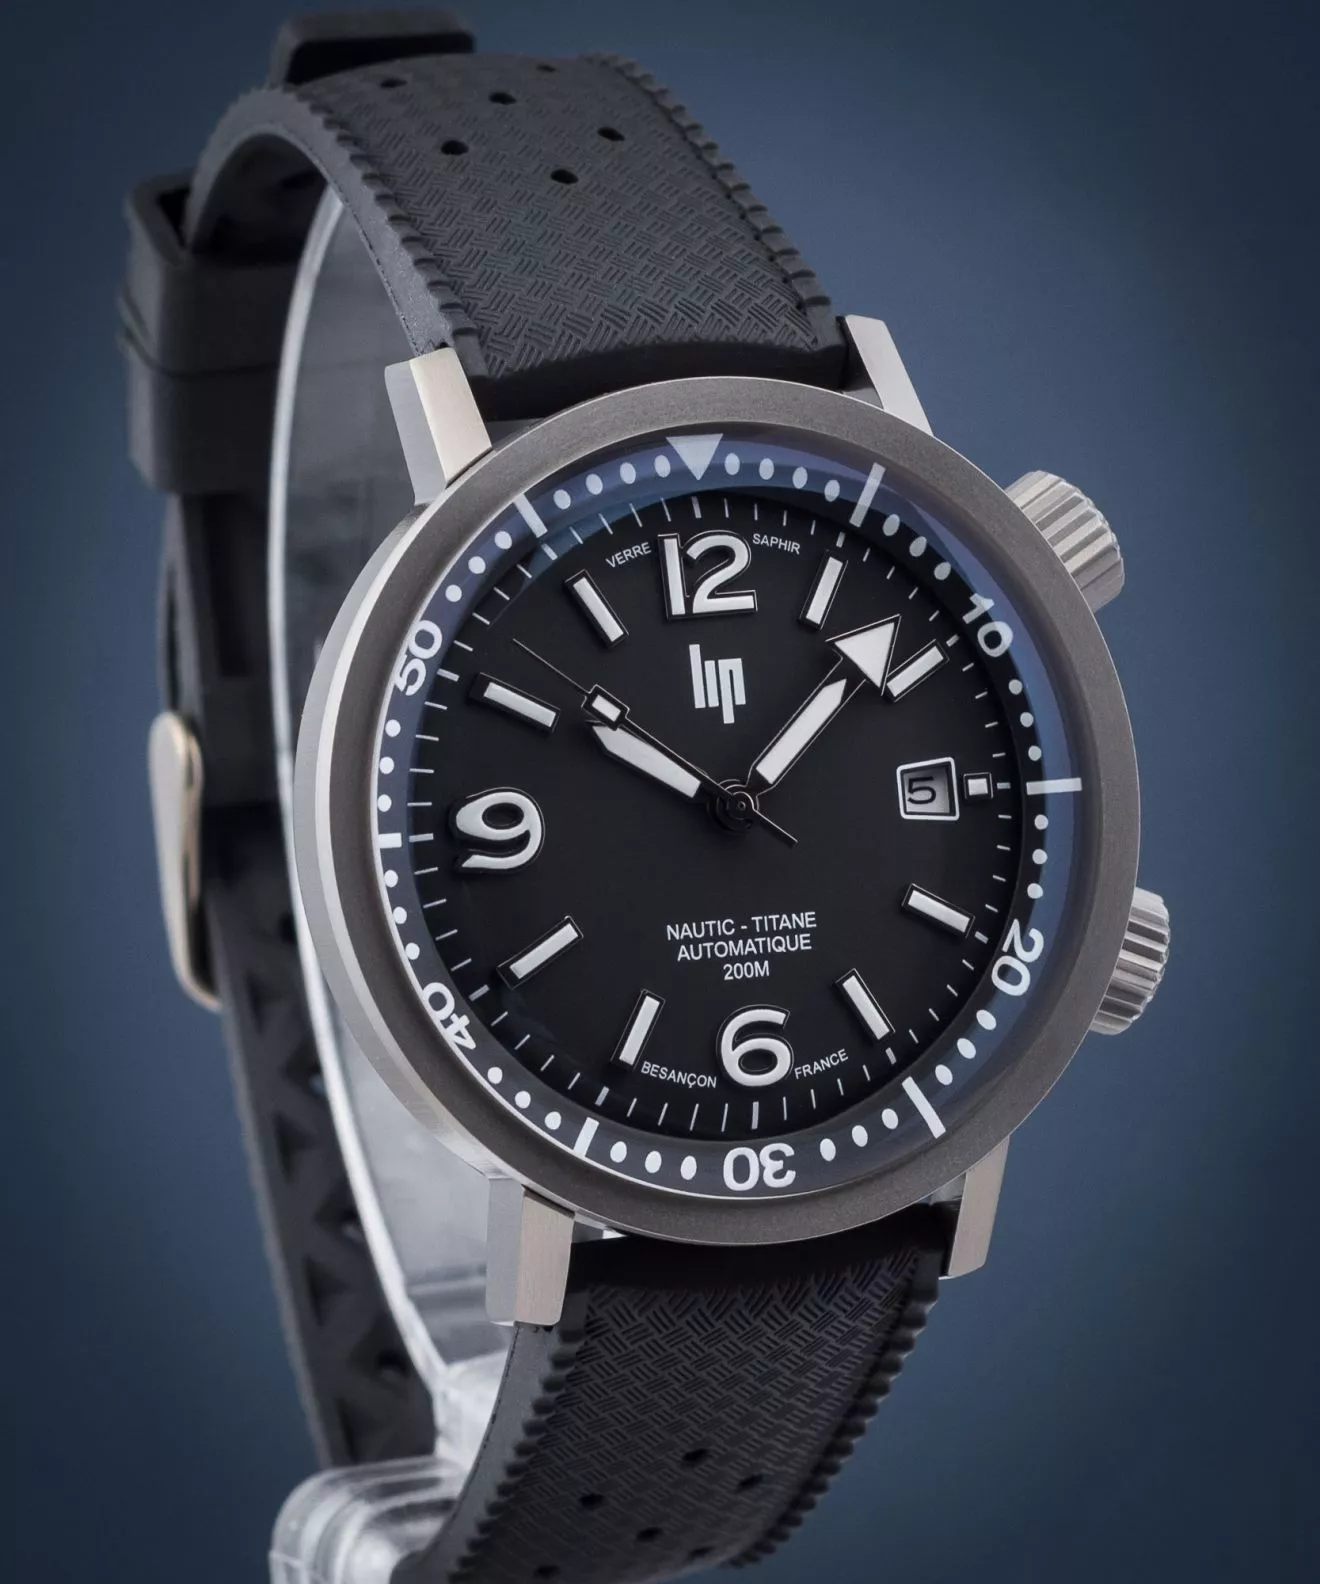 Lip Nautic Titane Automatic Limited Edition SET watch 671855